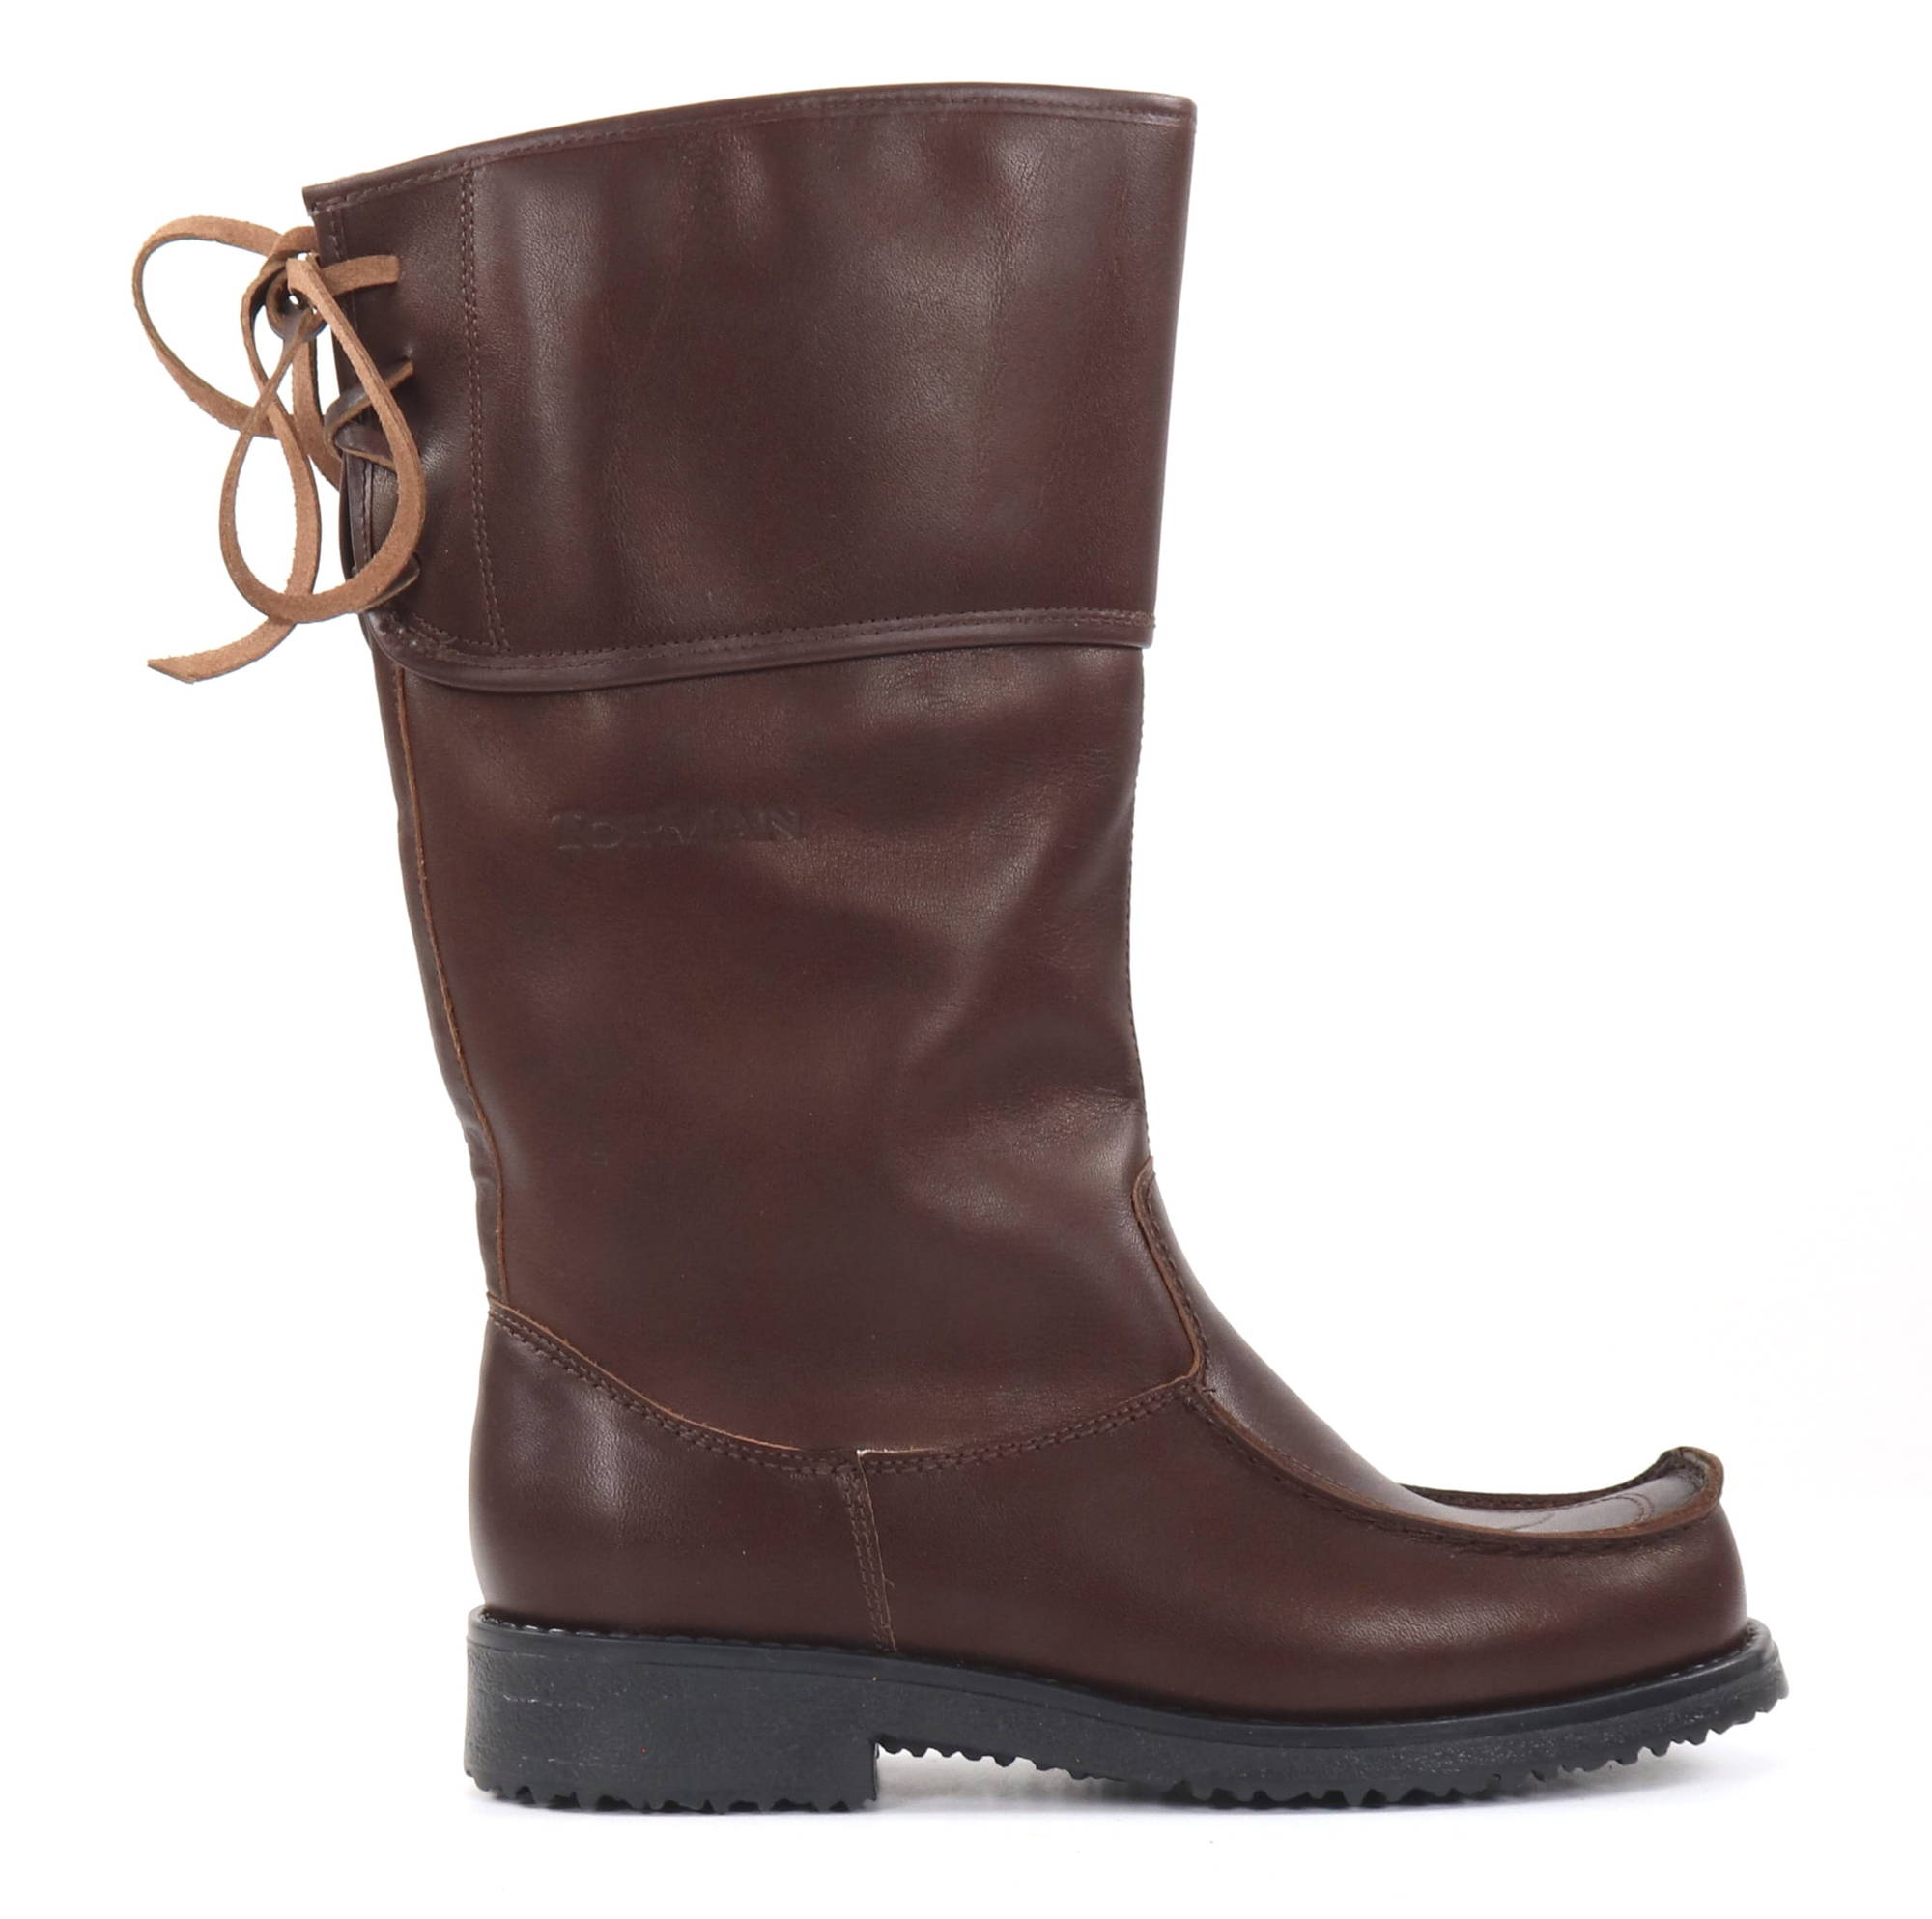 Topman Lappish Boots 42670 28 brown - Stilettoshop.eu webstore